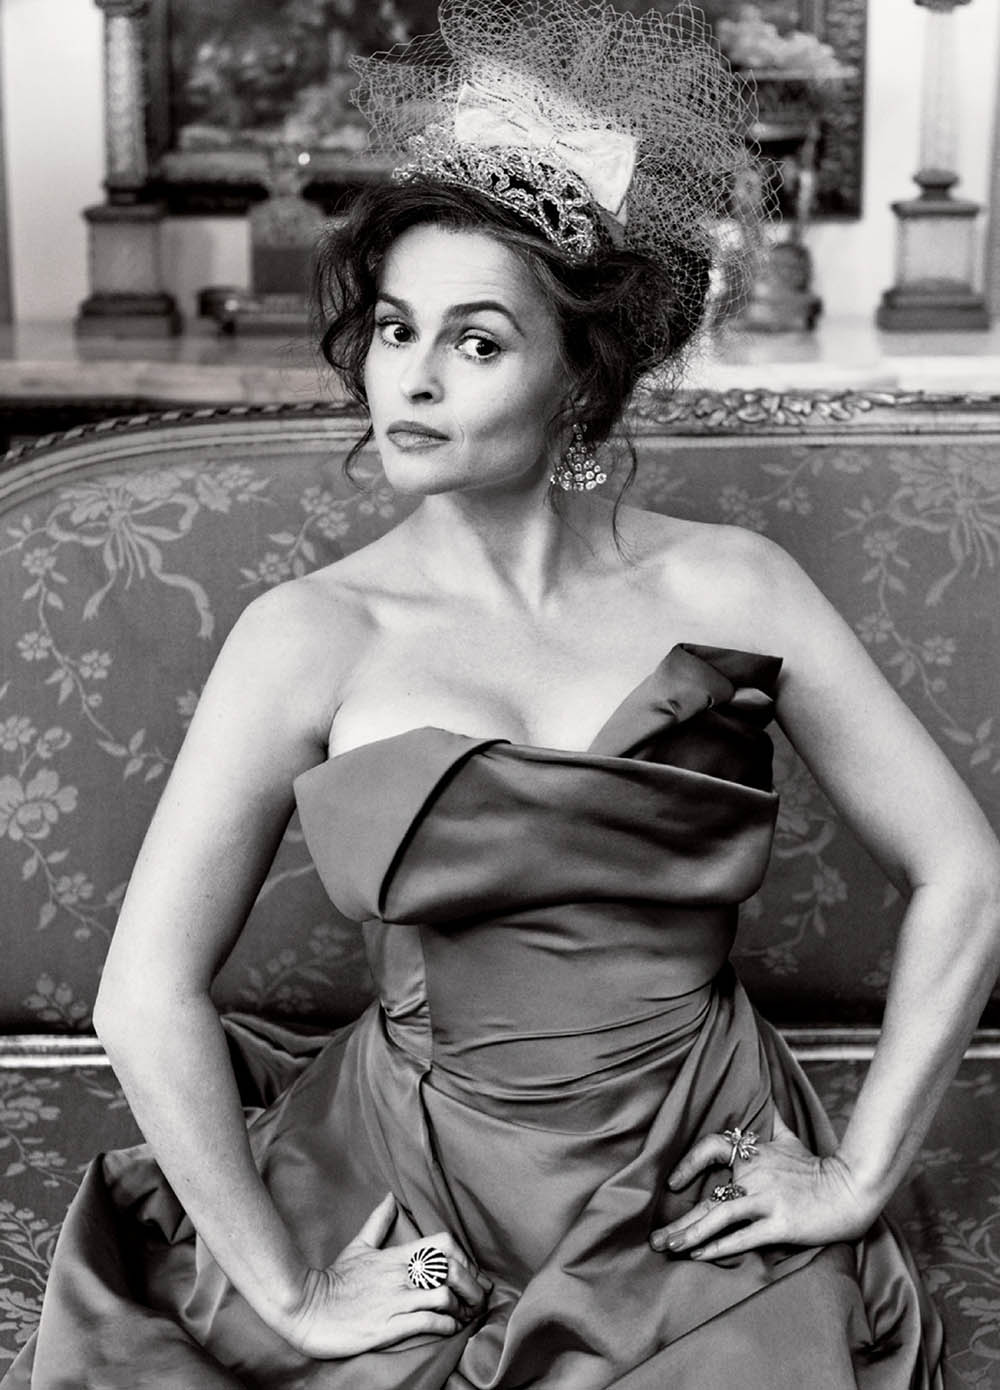 Helena Bonham Carter covers Harper’s Bazaar UK December 2019 by Pamela Hanson